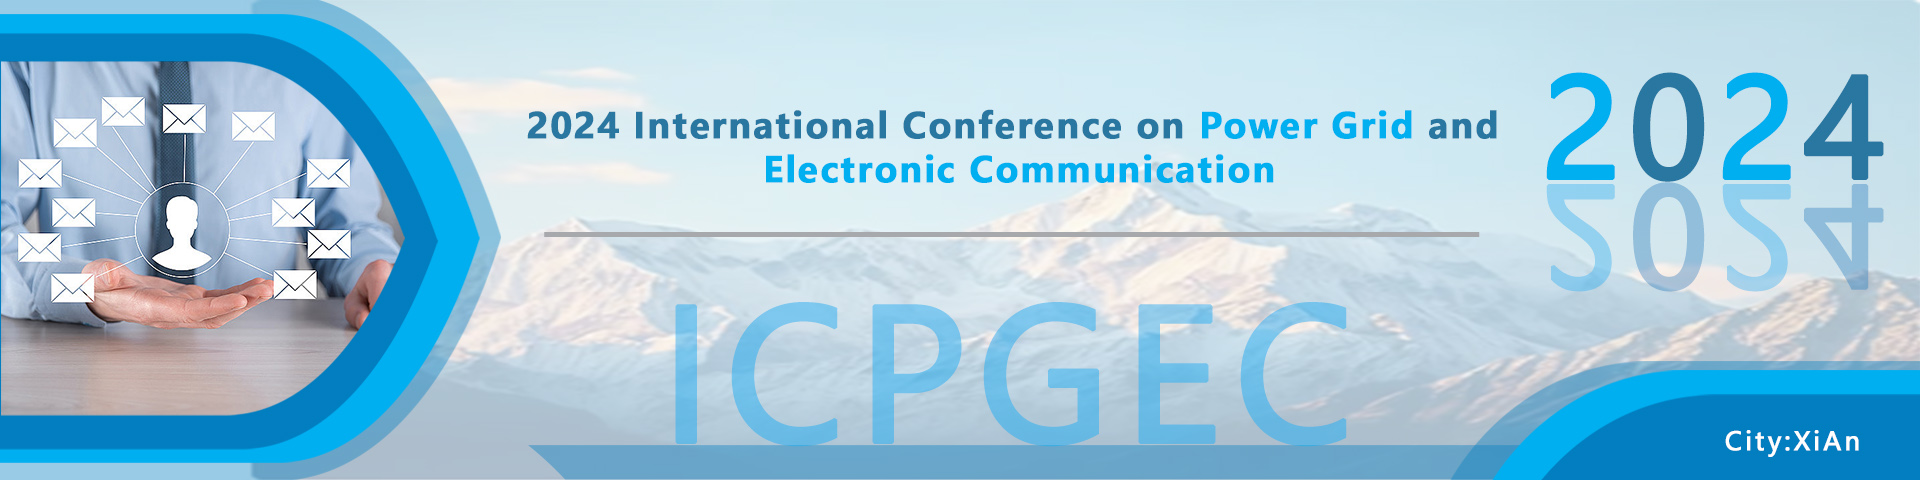 【EI会议|投稿优惠】2024年电力电网与电子通讯国际会议(ICPGEC 2024)